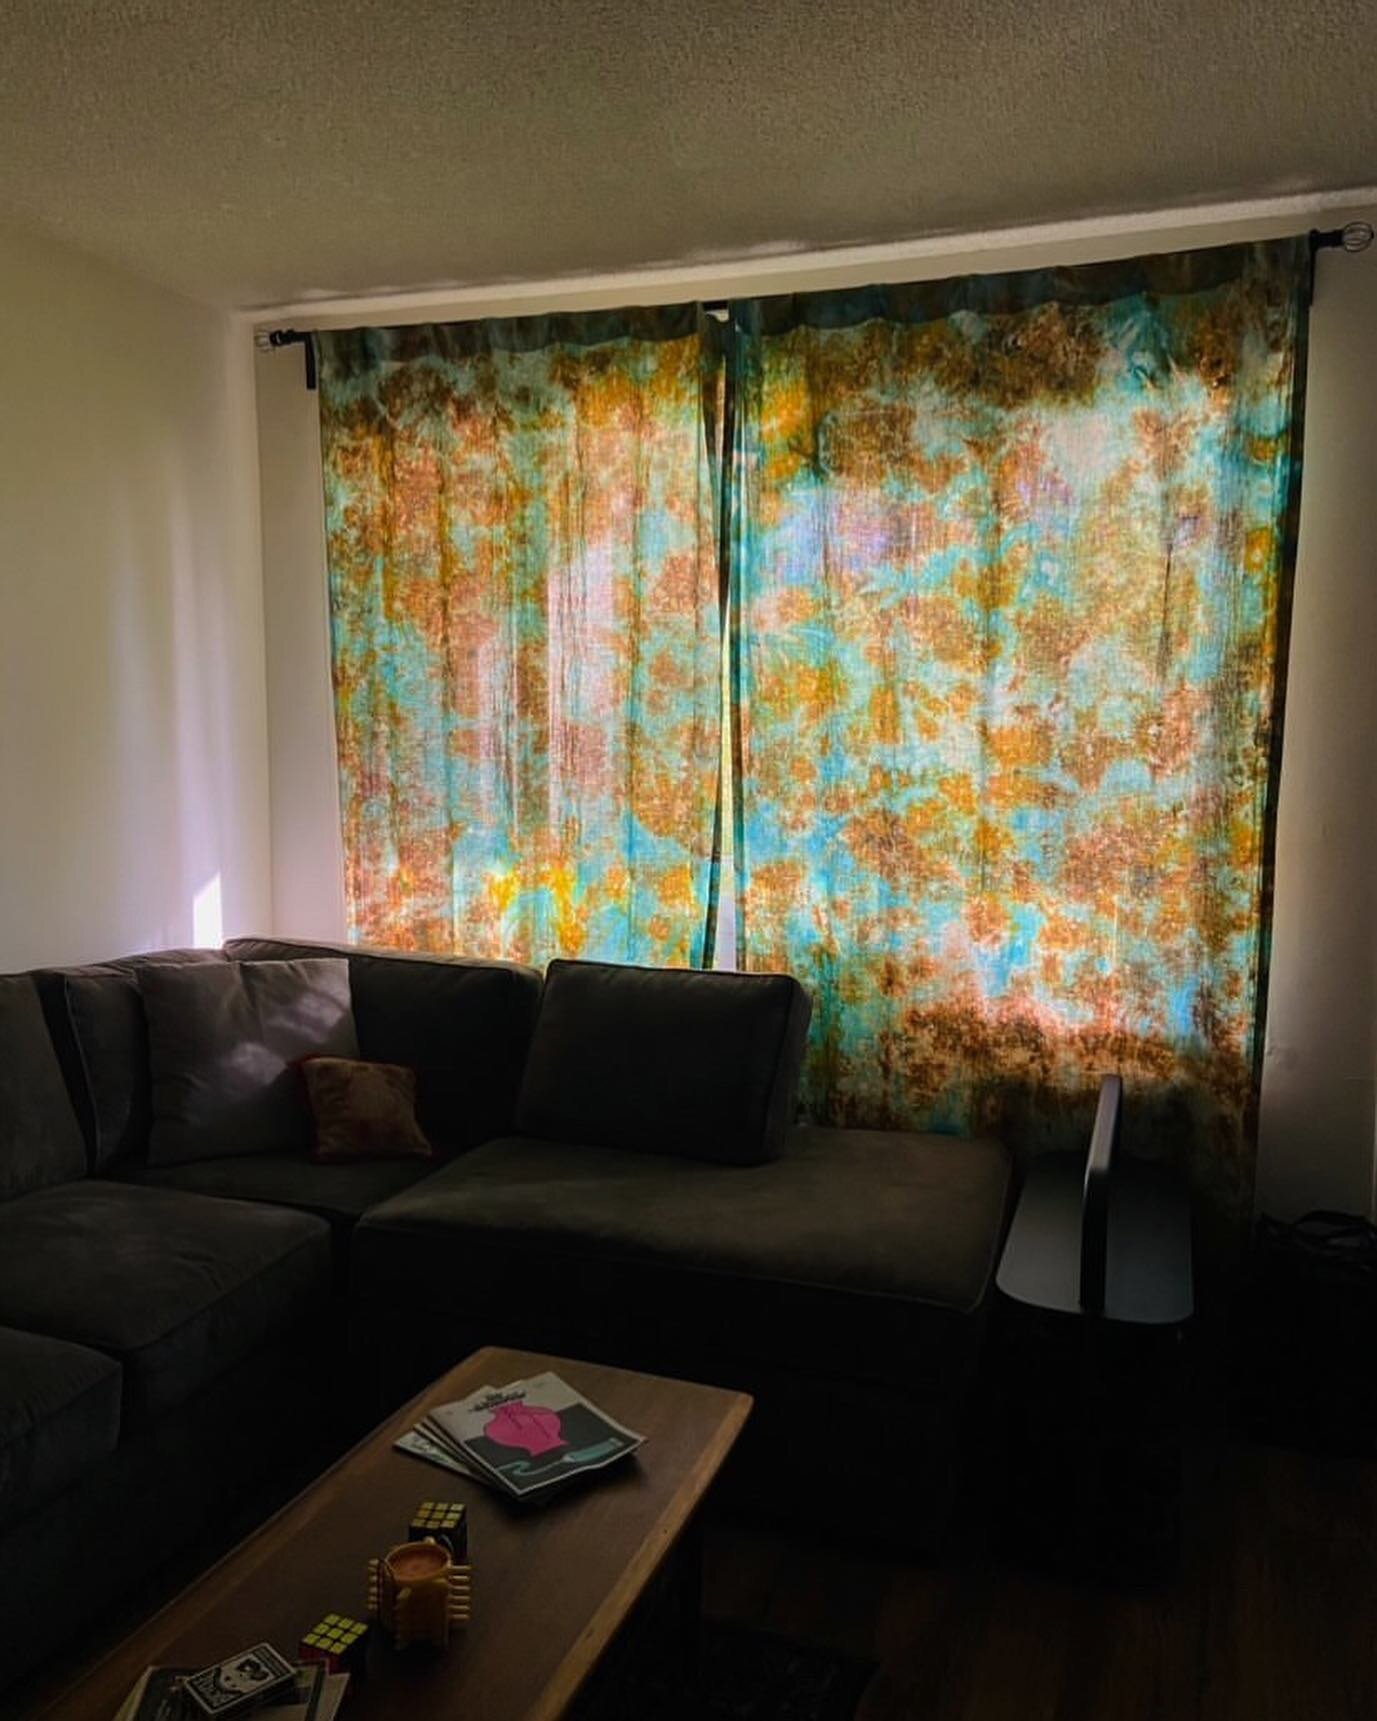 Sunshine linen curtains 🌞 they change color in different light ~ in the home of @avenyc 🦋
.
.
.
.
#textiledesign #textiledesigner #dyersofinstagram #flowerdyepatterns #dyedetails #dyeparticles #handdyedtextiles #handdyed #handdye #handdyedfabric #i